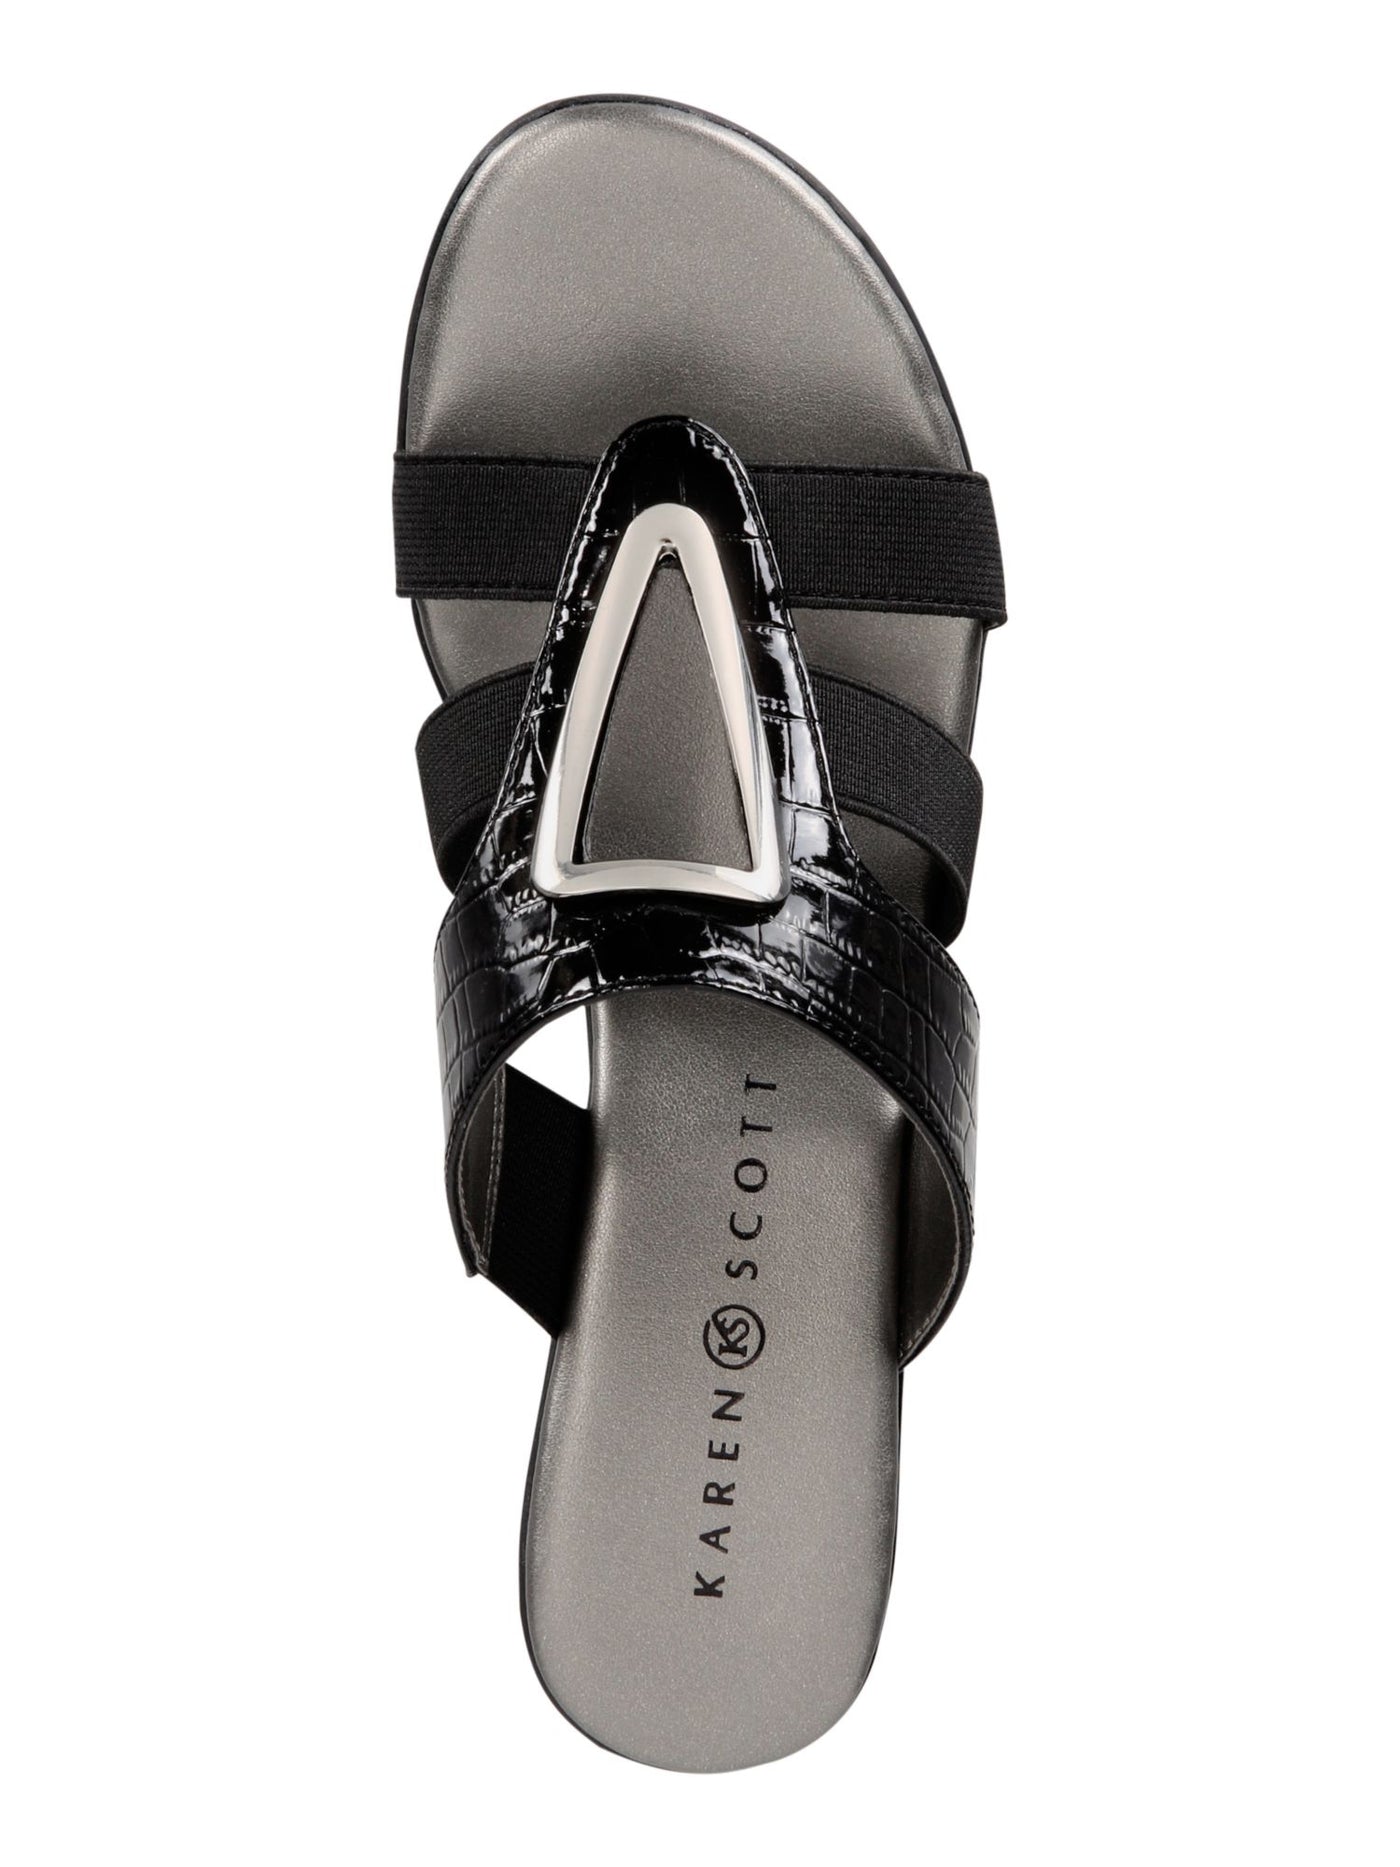 KAREN SCOTT Womens Black Snake-Embossed Strap Cut-Outs Metal Decor Engle Round Toe Sculpted Heel Slip On Slide Sandals Shoes 7.5 M